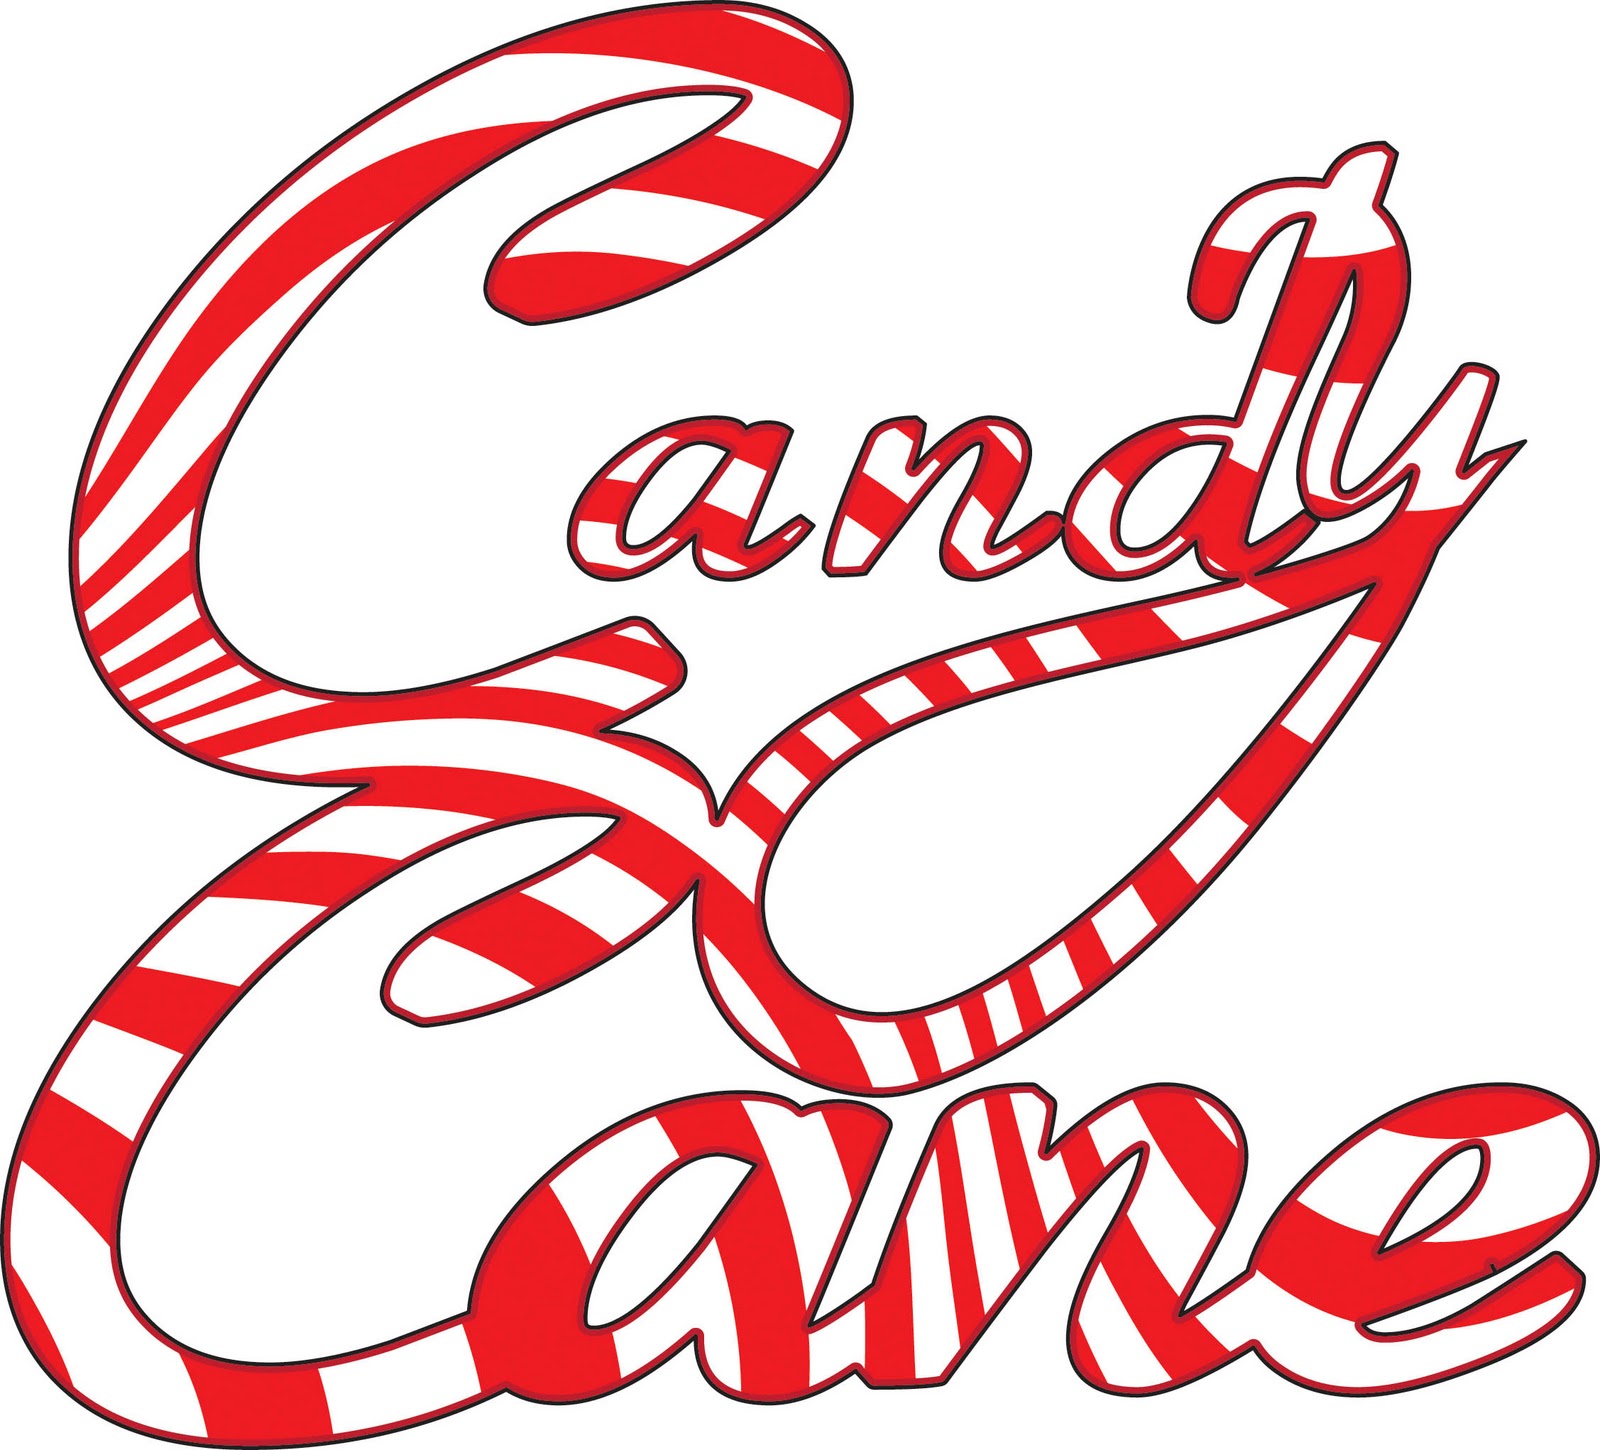 Candy cane border clip art clipart